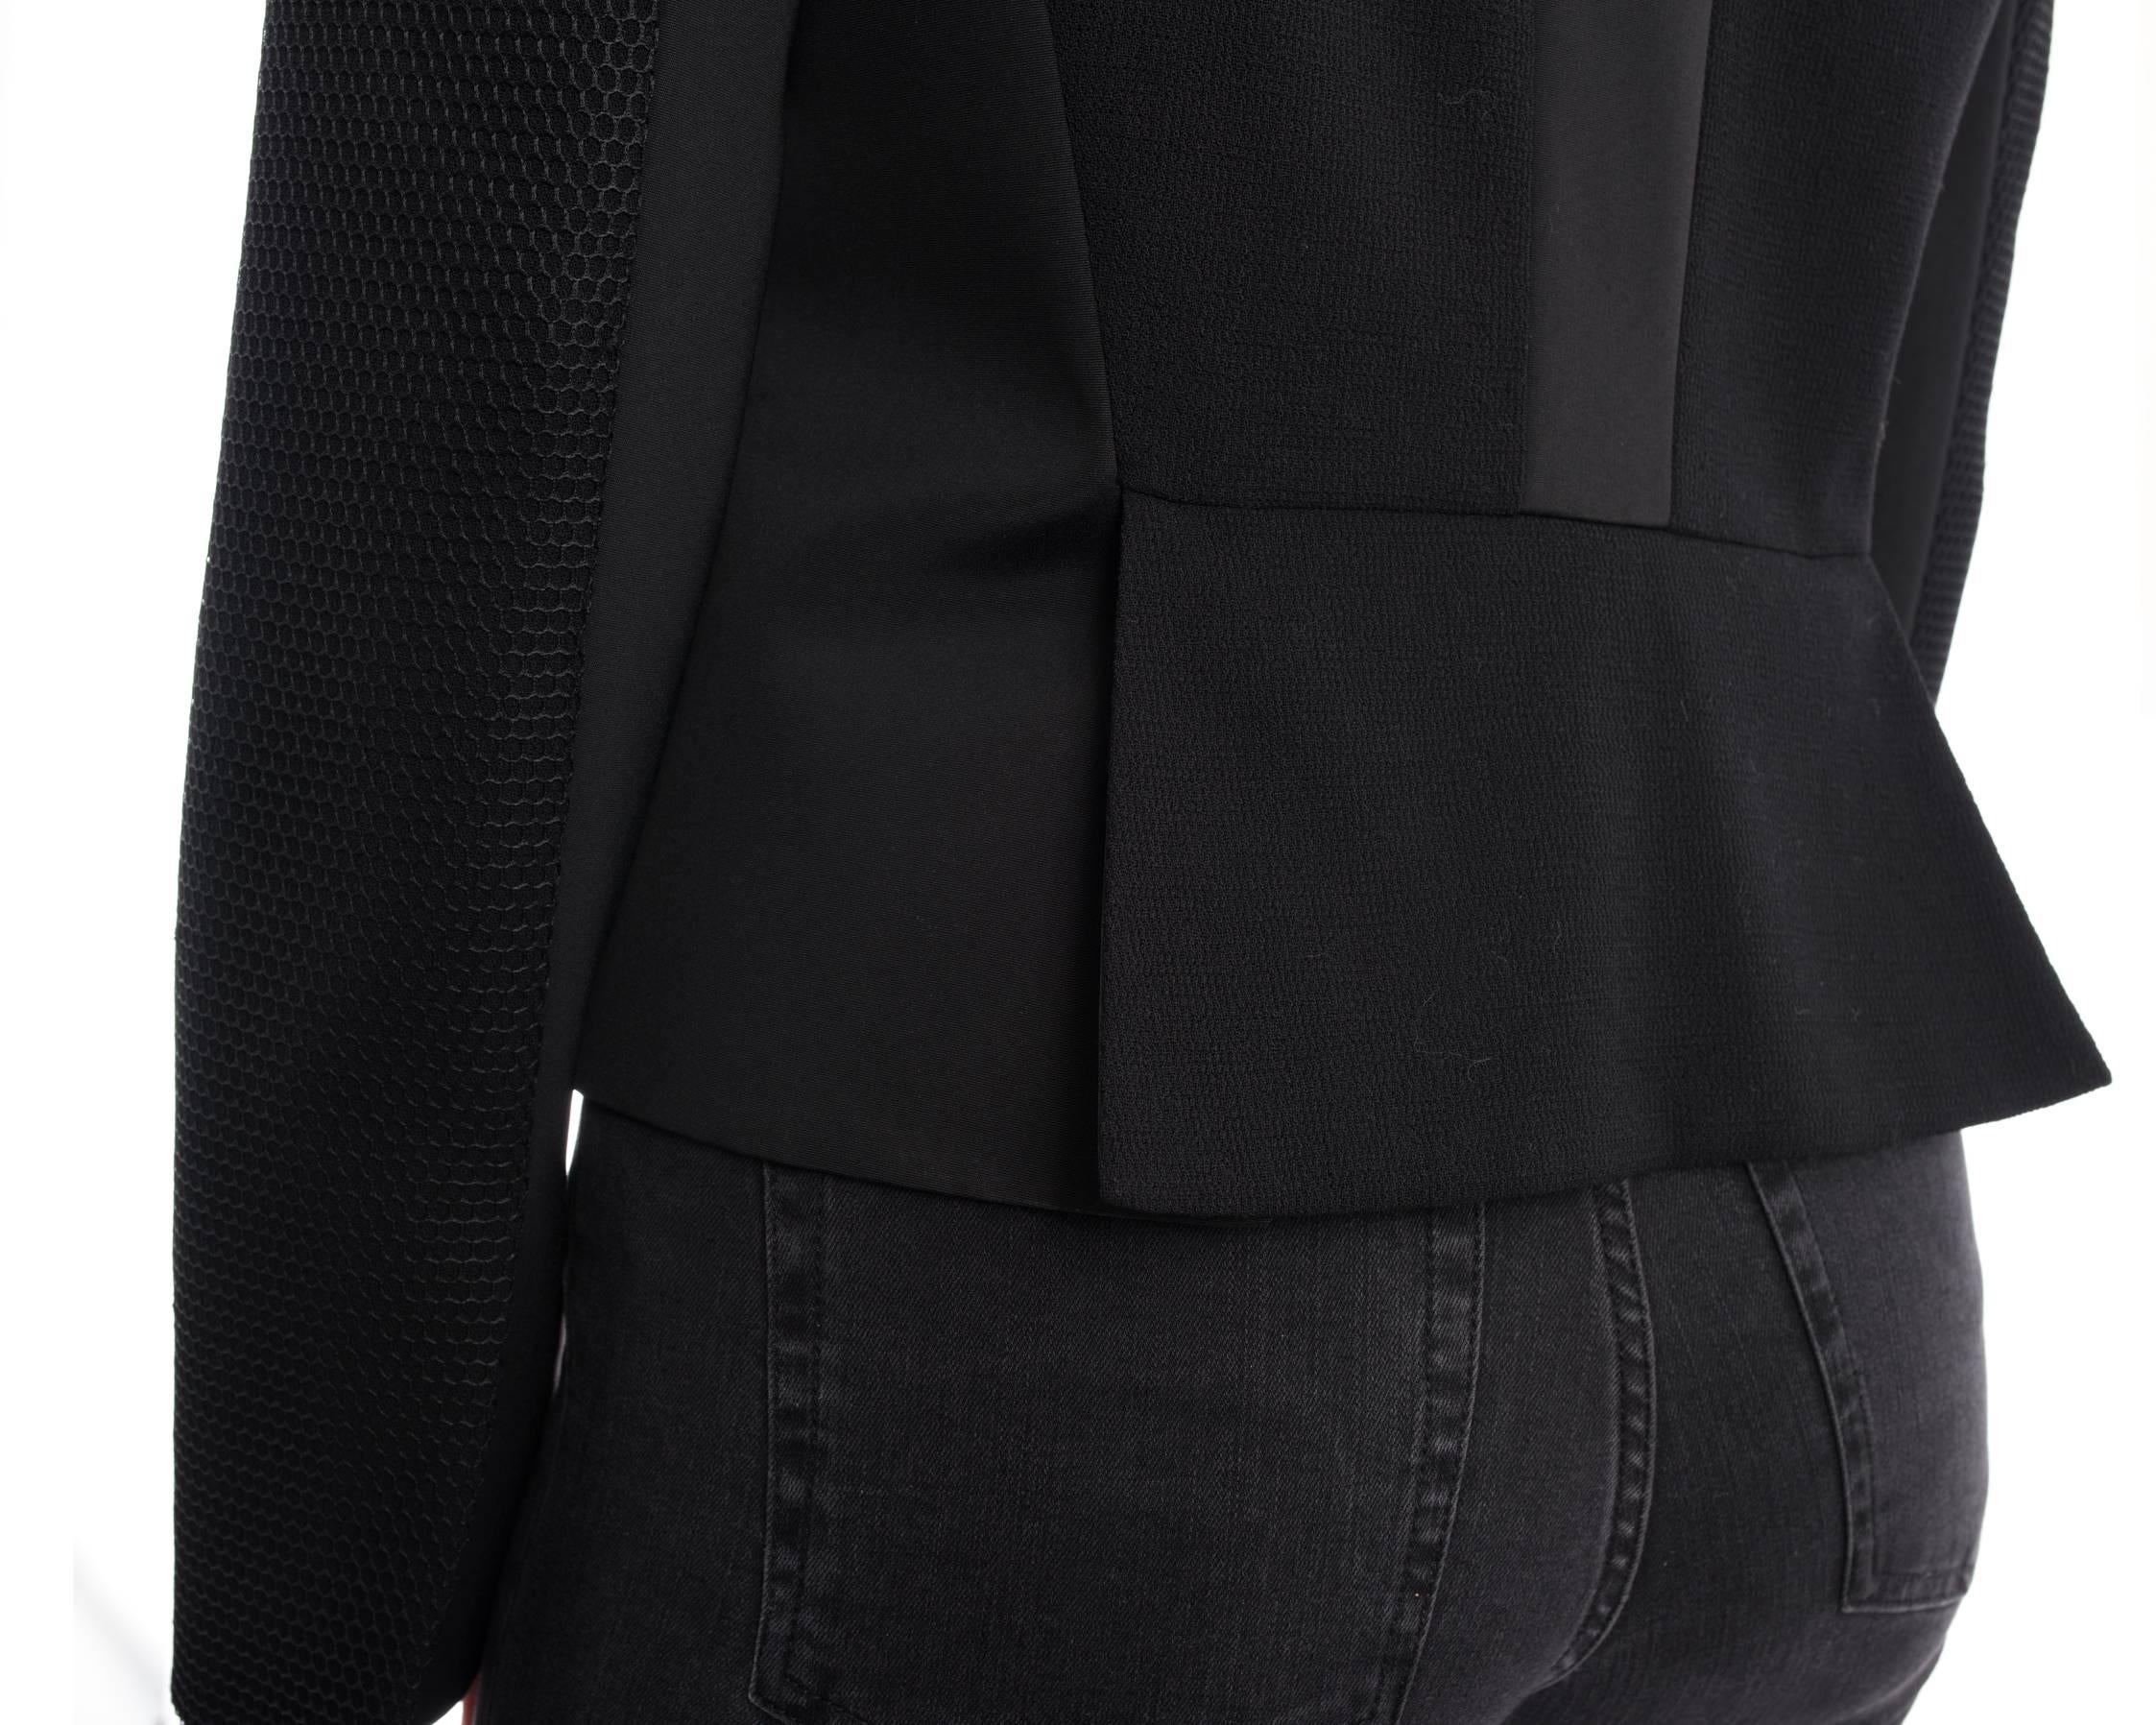 Oscar De La Renta SS 2016 Black Sequin Mesh Applique Evening Jacket - 8 3